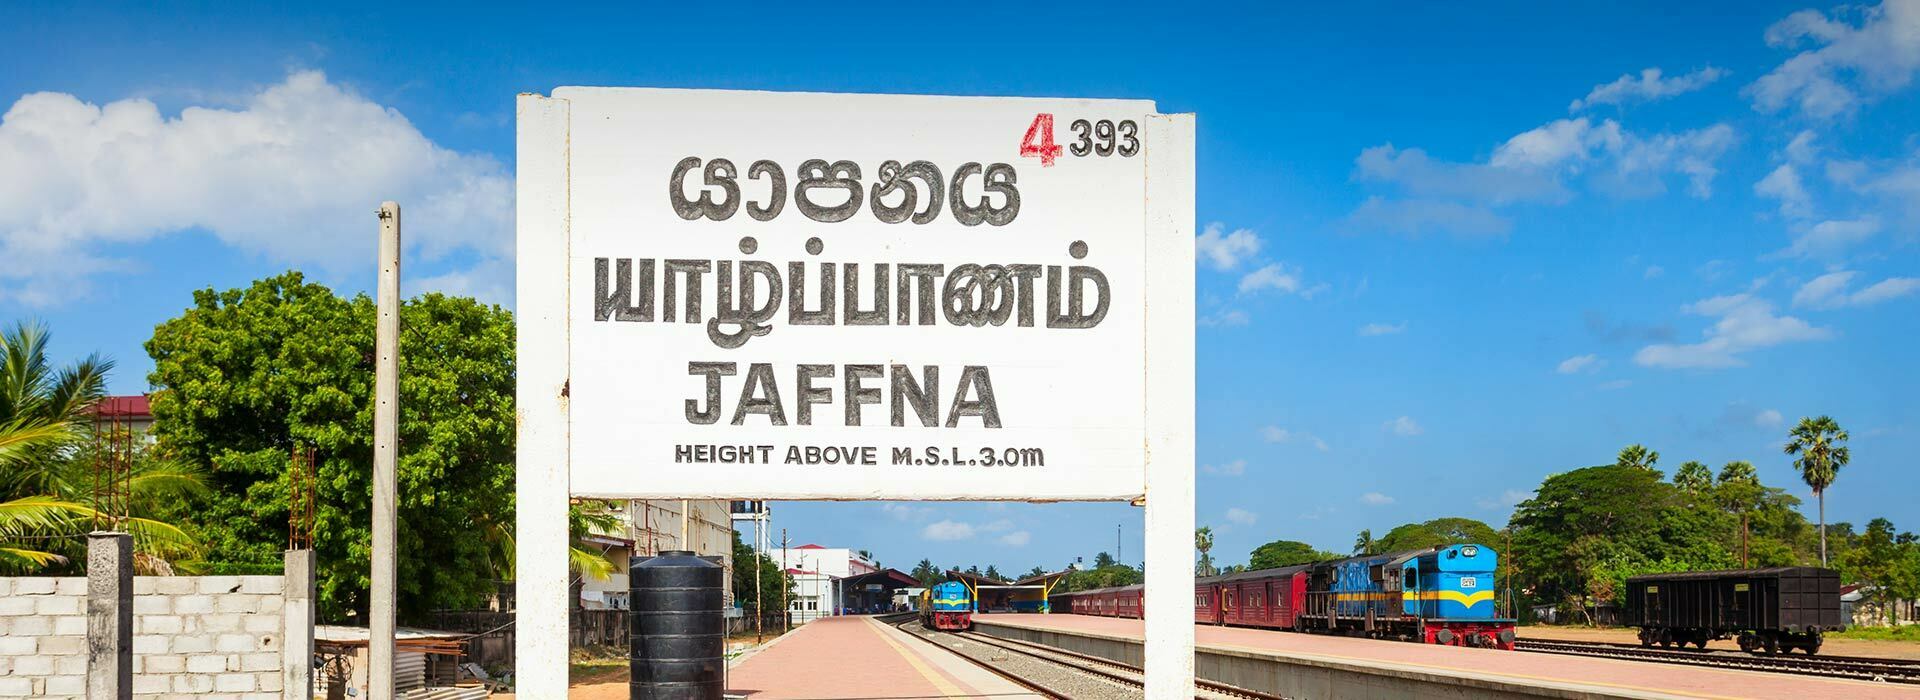 Things to do in Jaffna, Sri Lanka